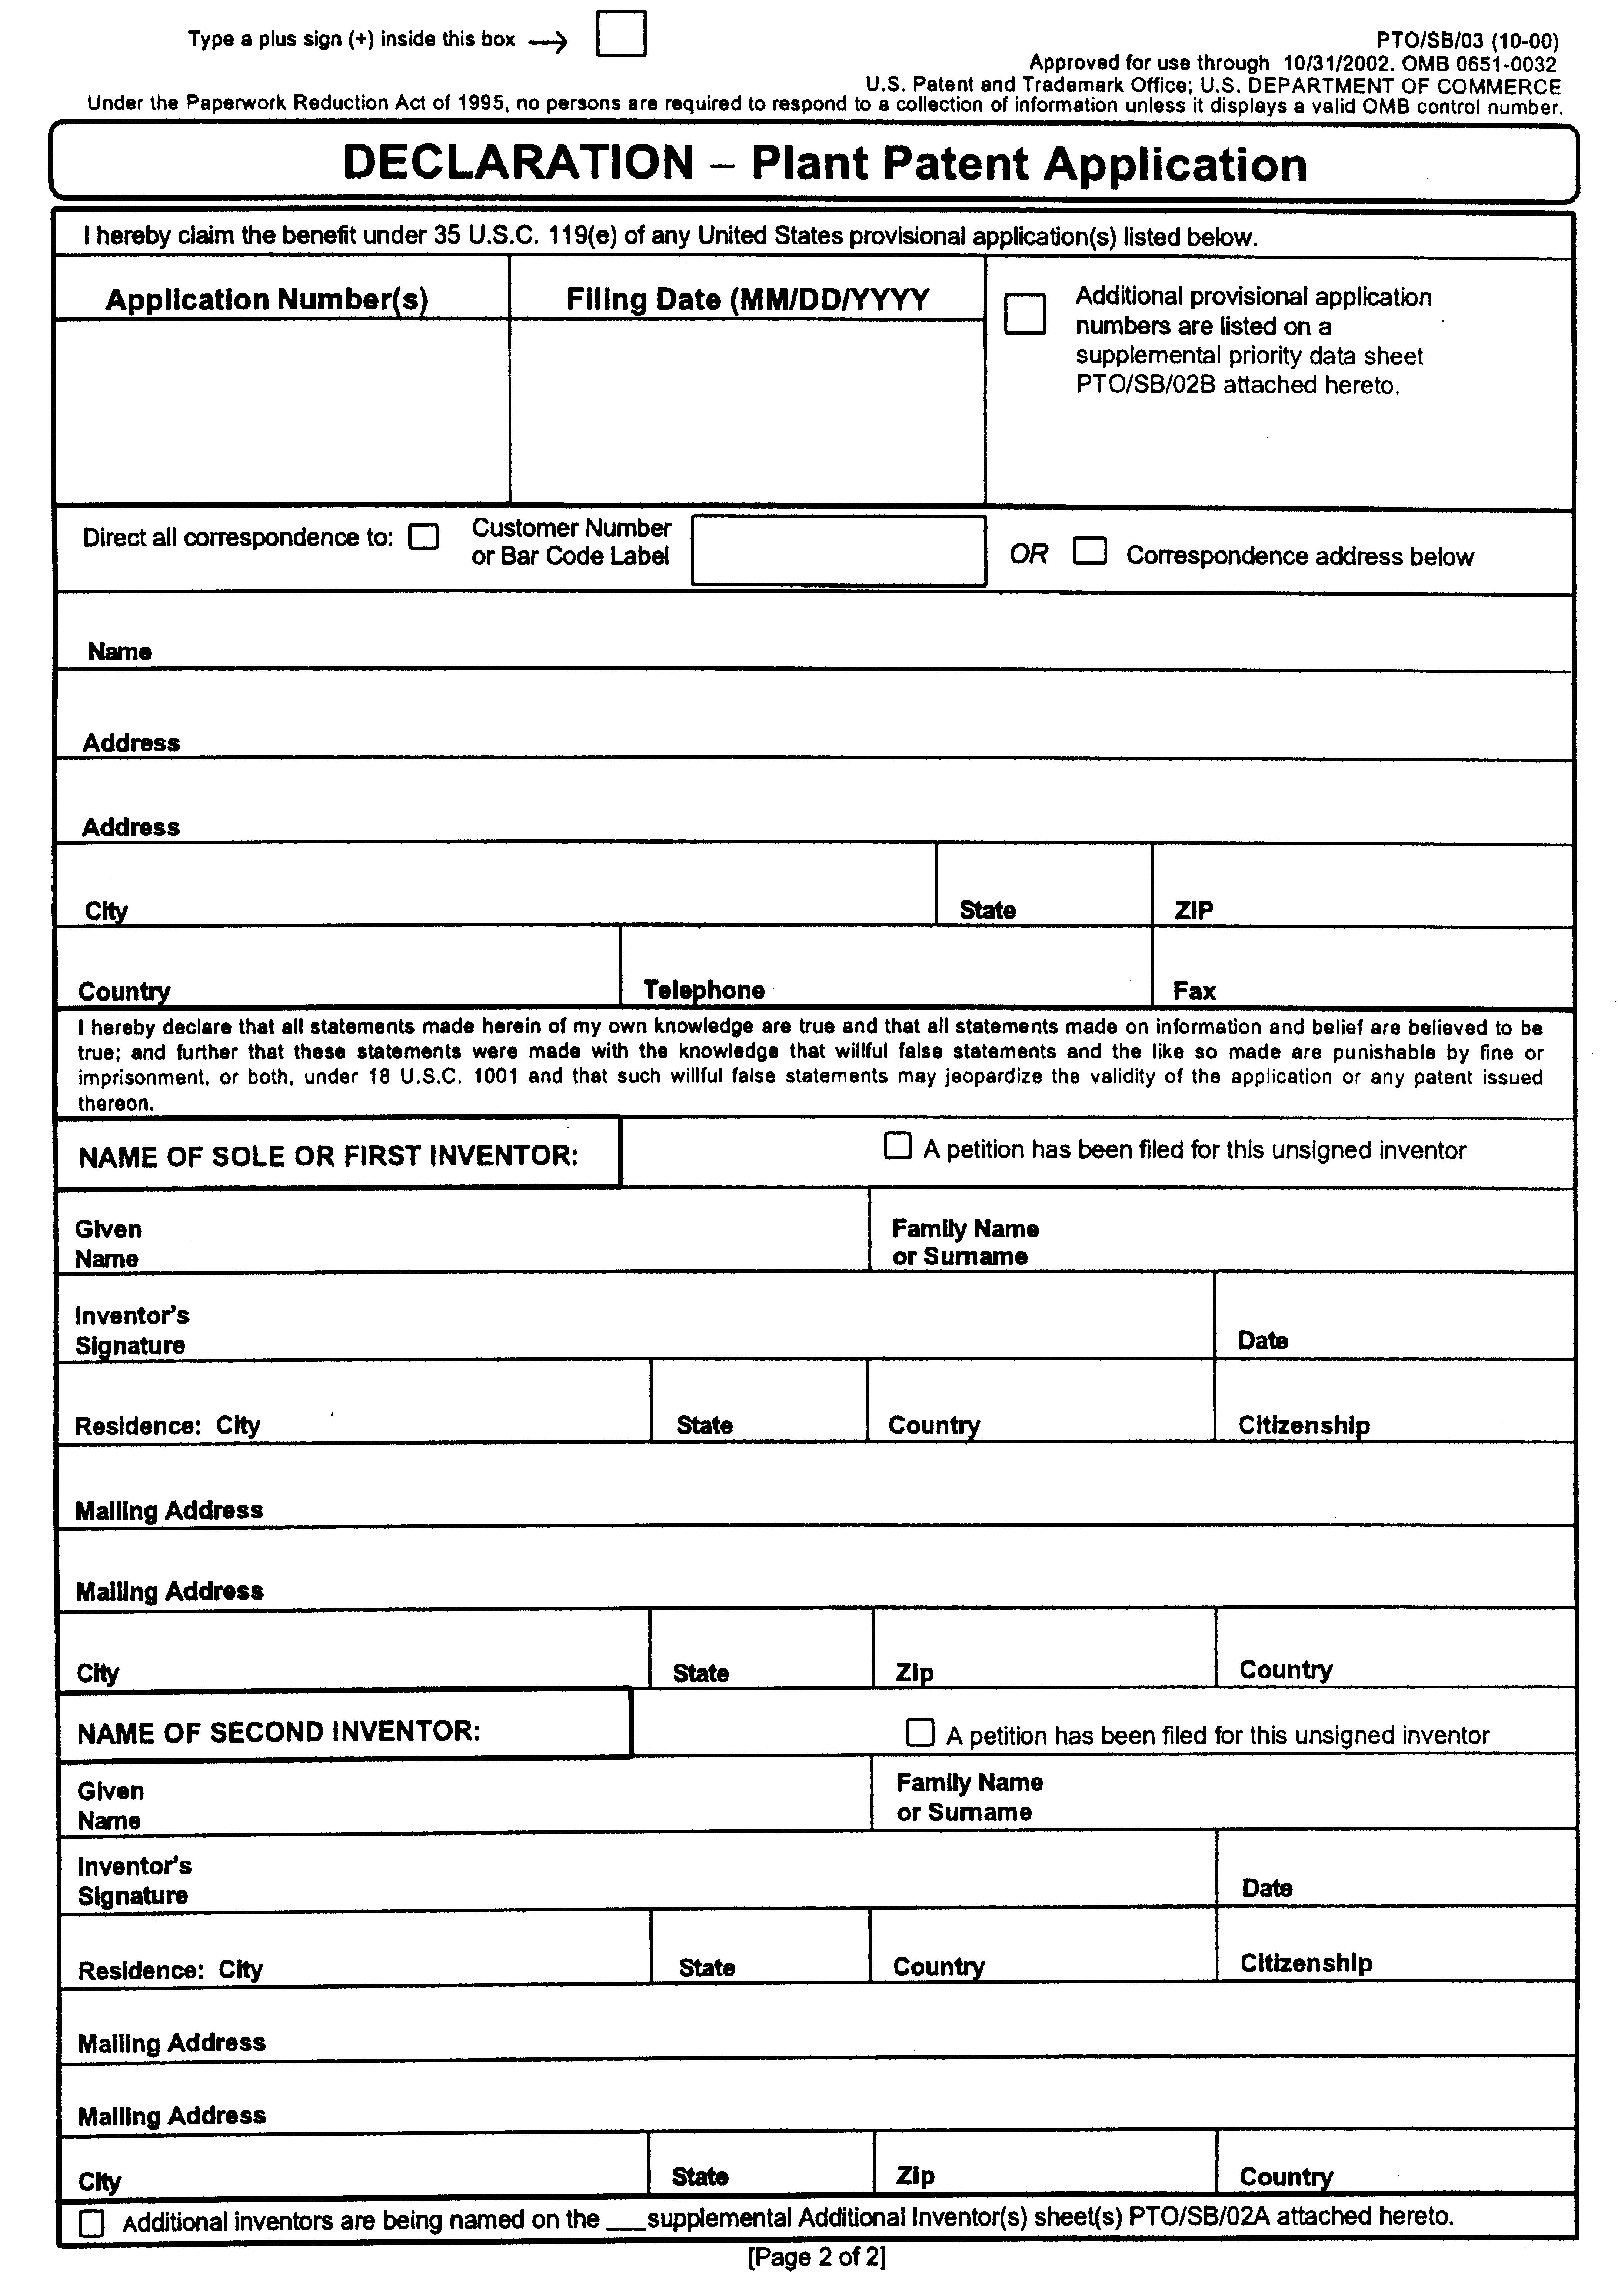 form pto/sb/03. plant patent application